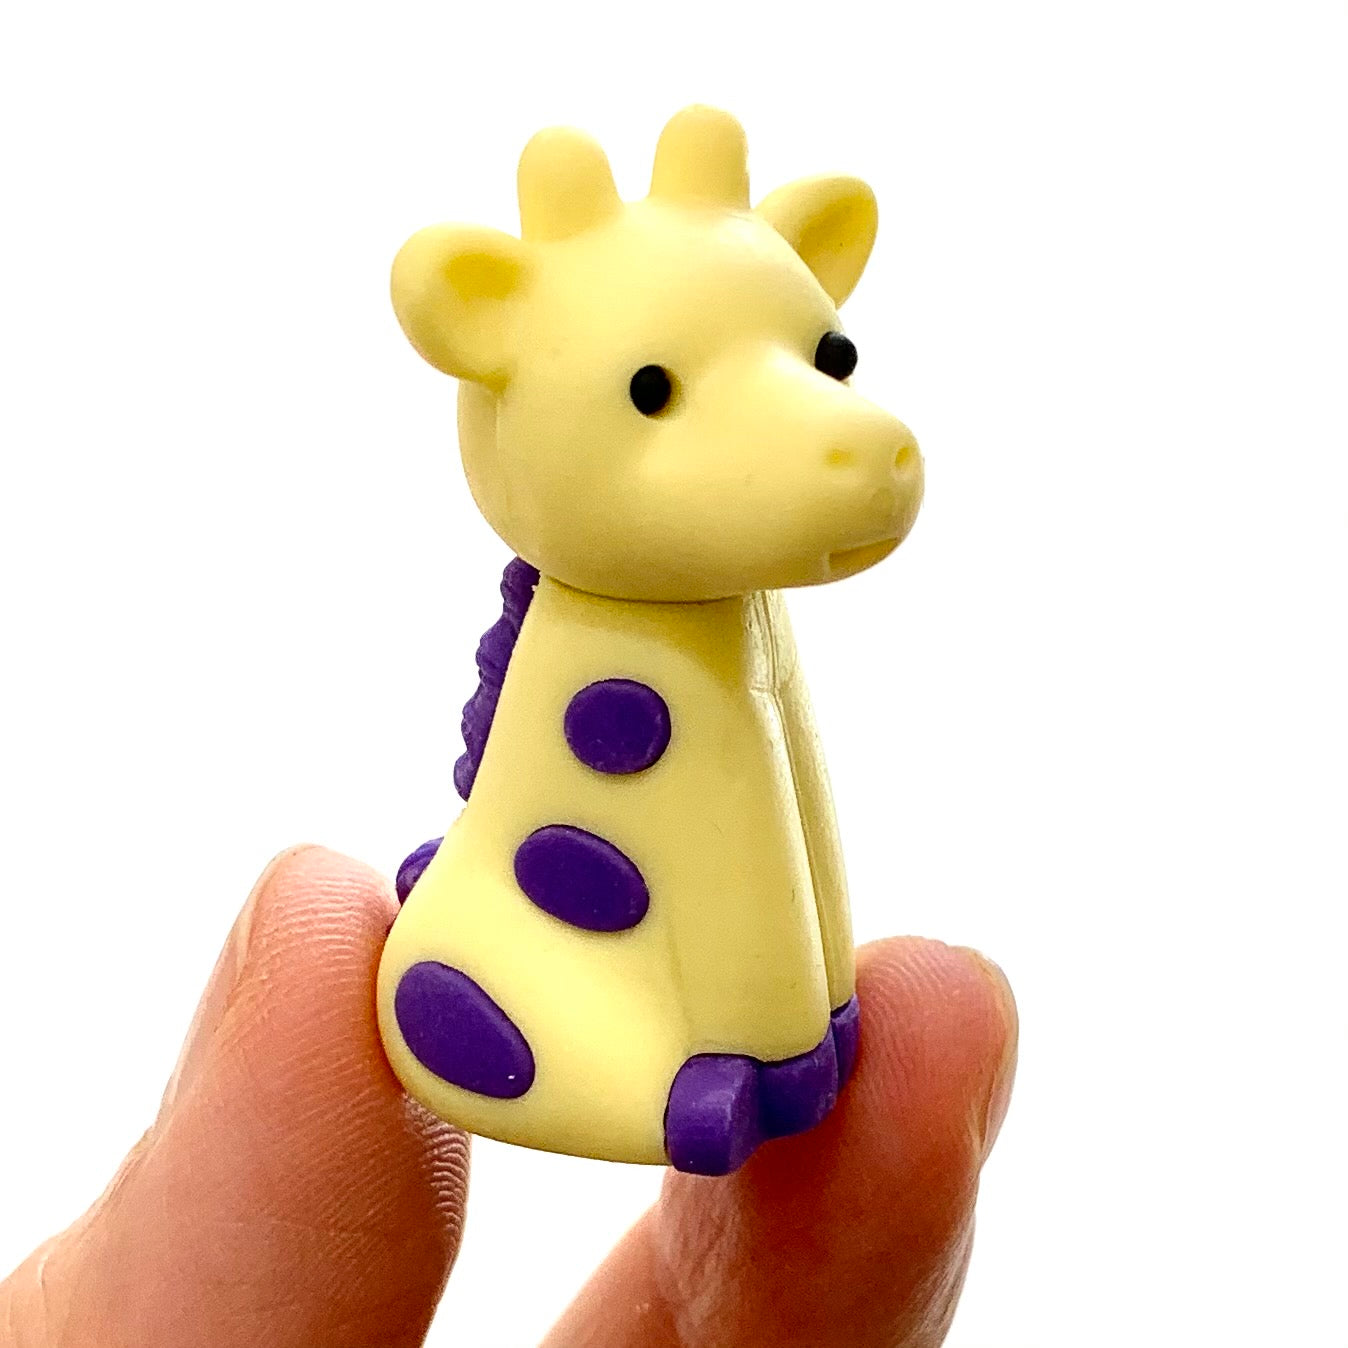 384511 IWAKO Colorz Giraffe -1 box of 5 Erasers